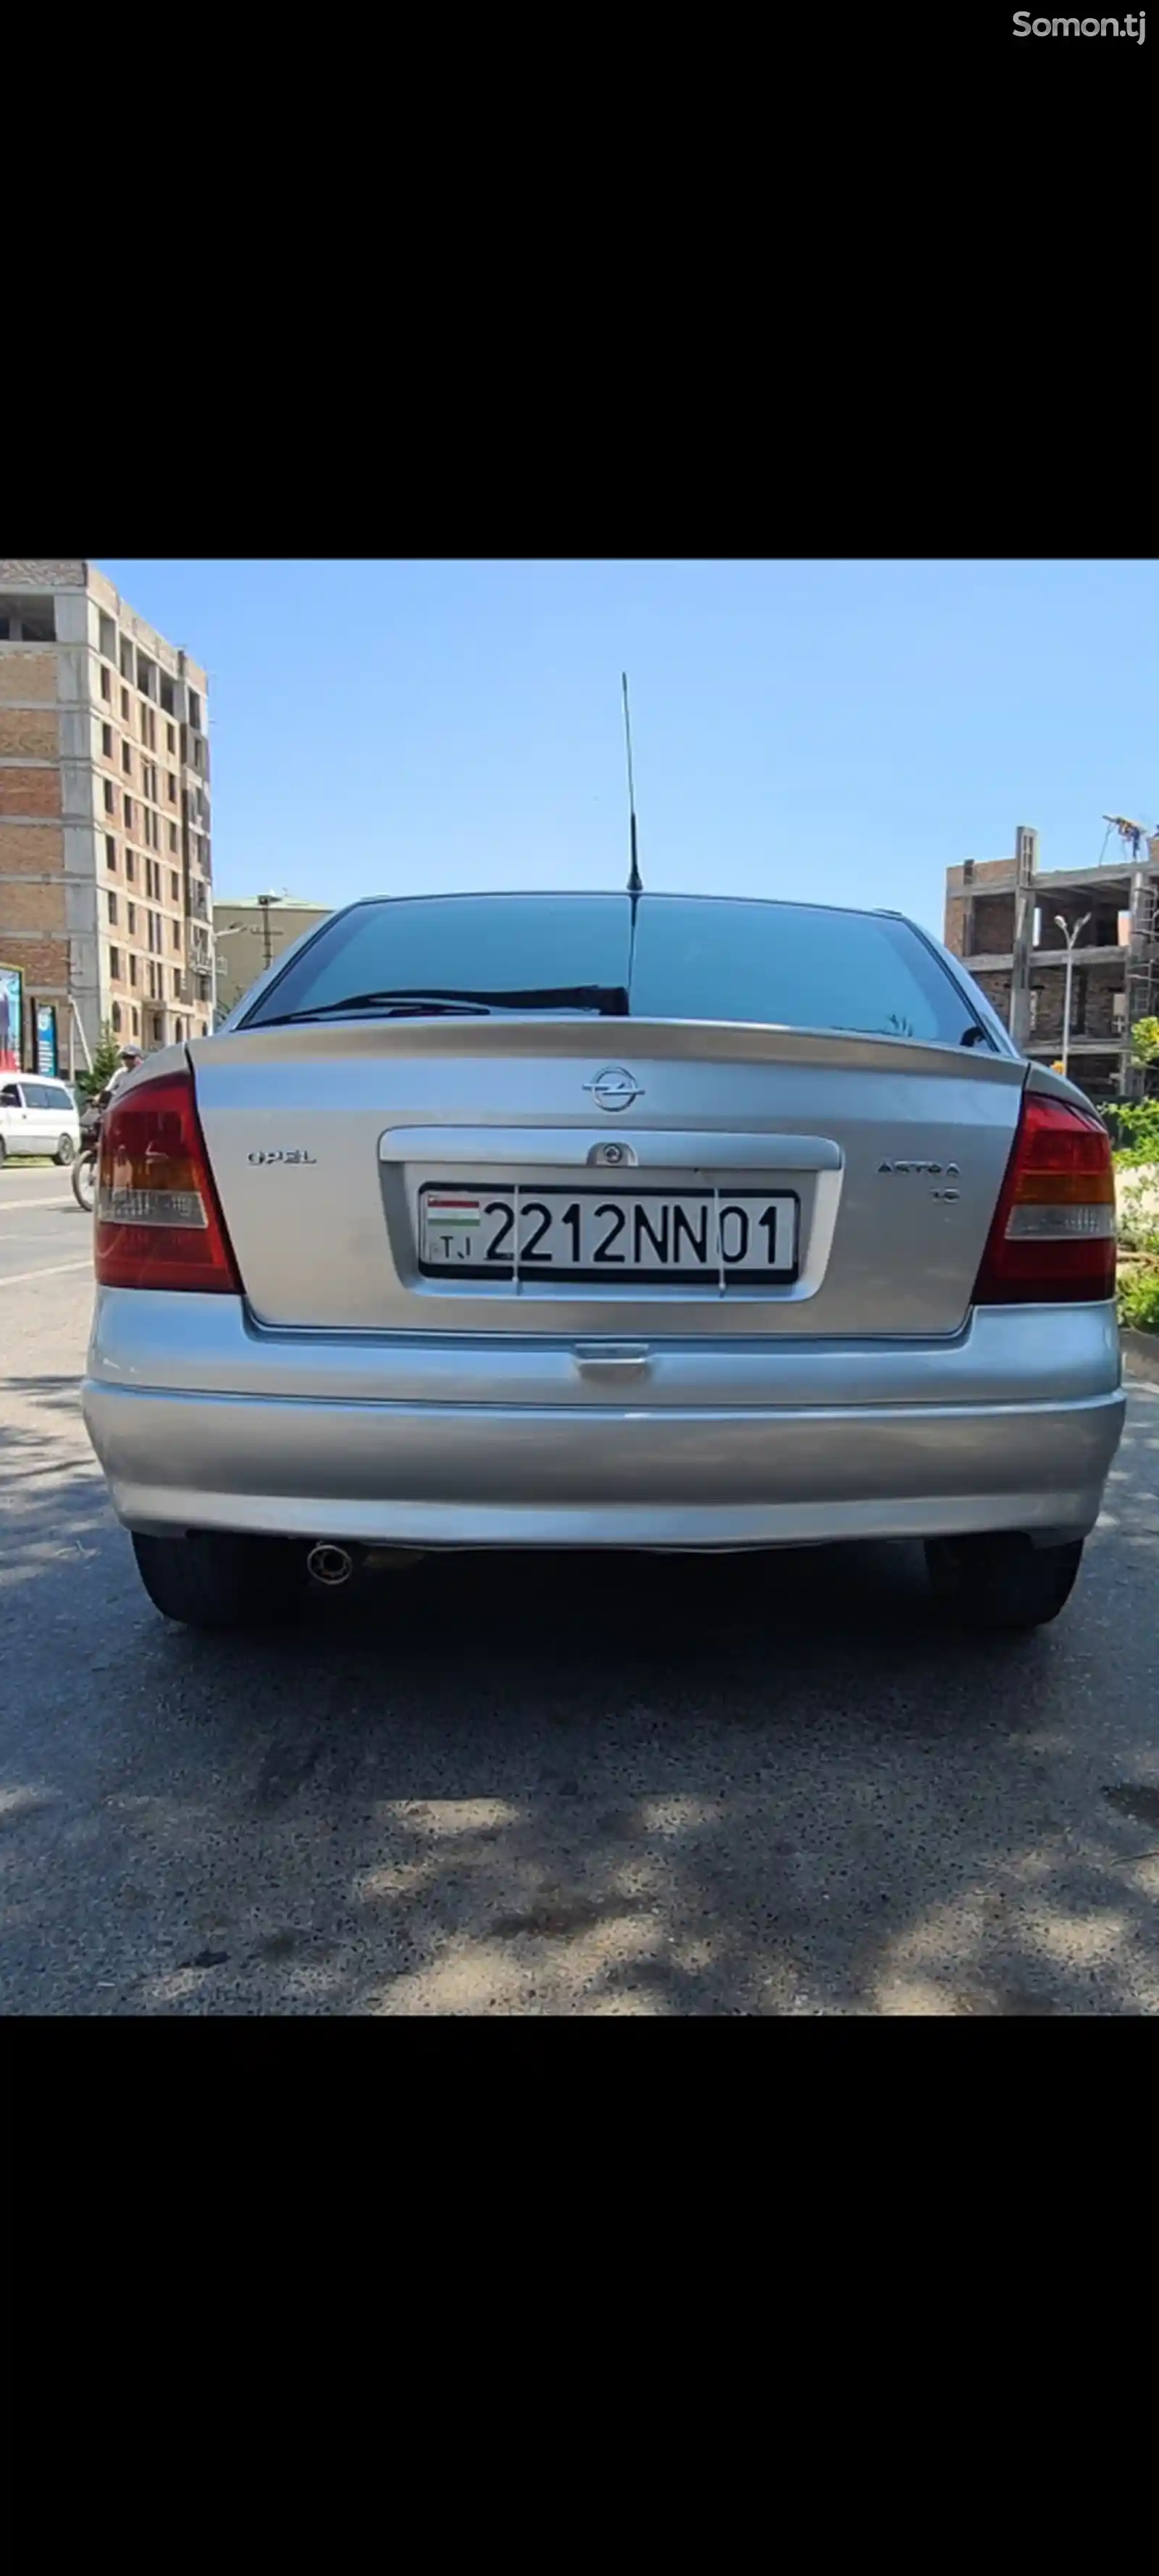 Opel Astra G, 1999-2